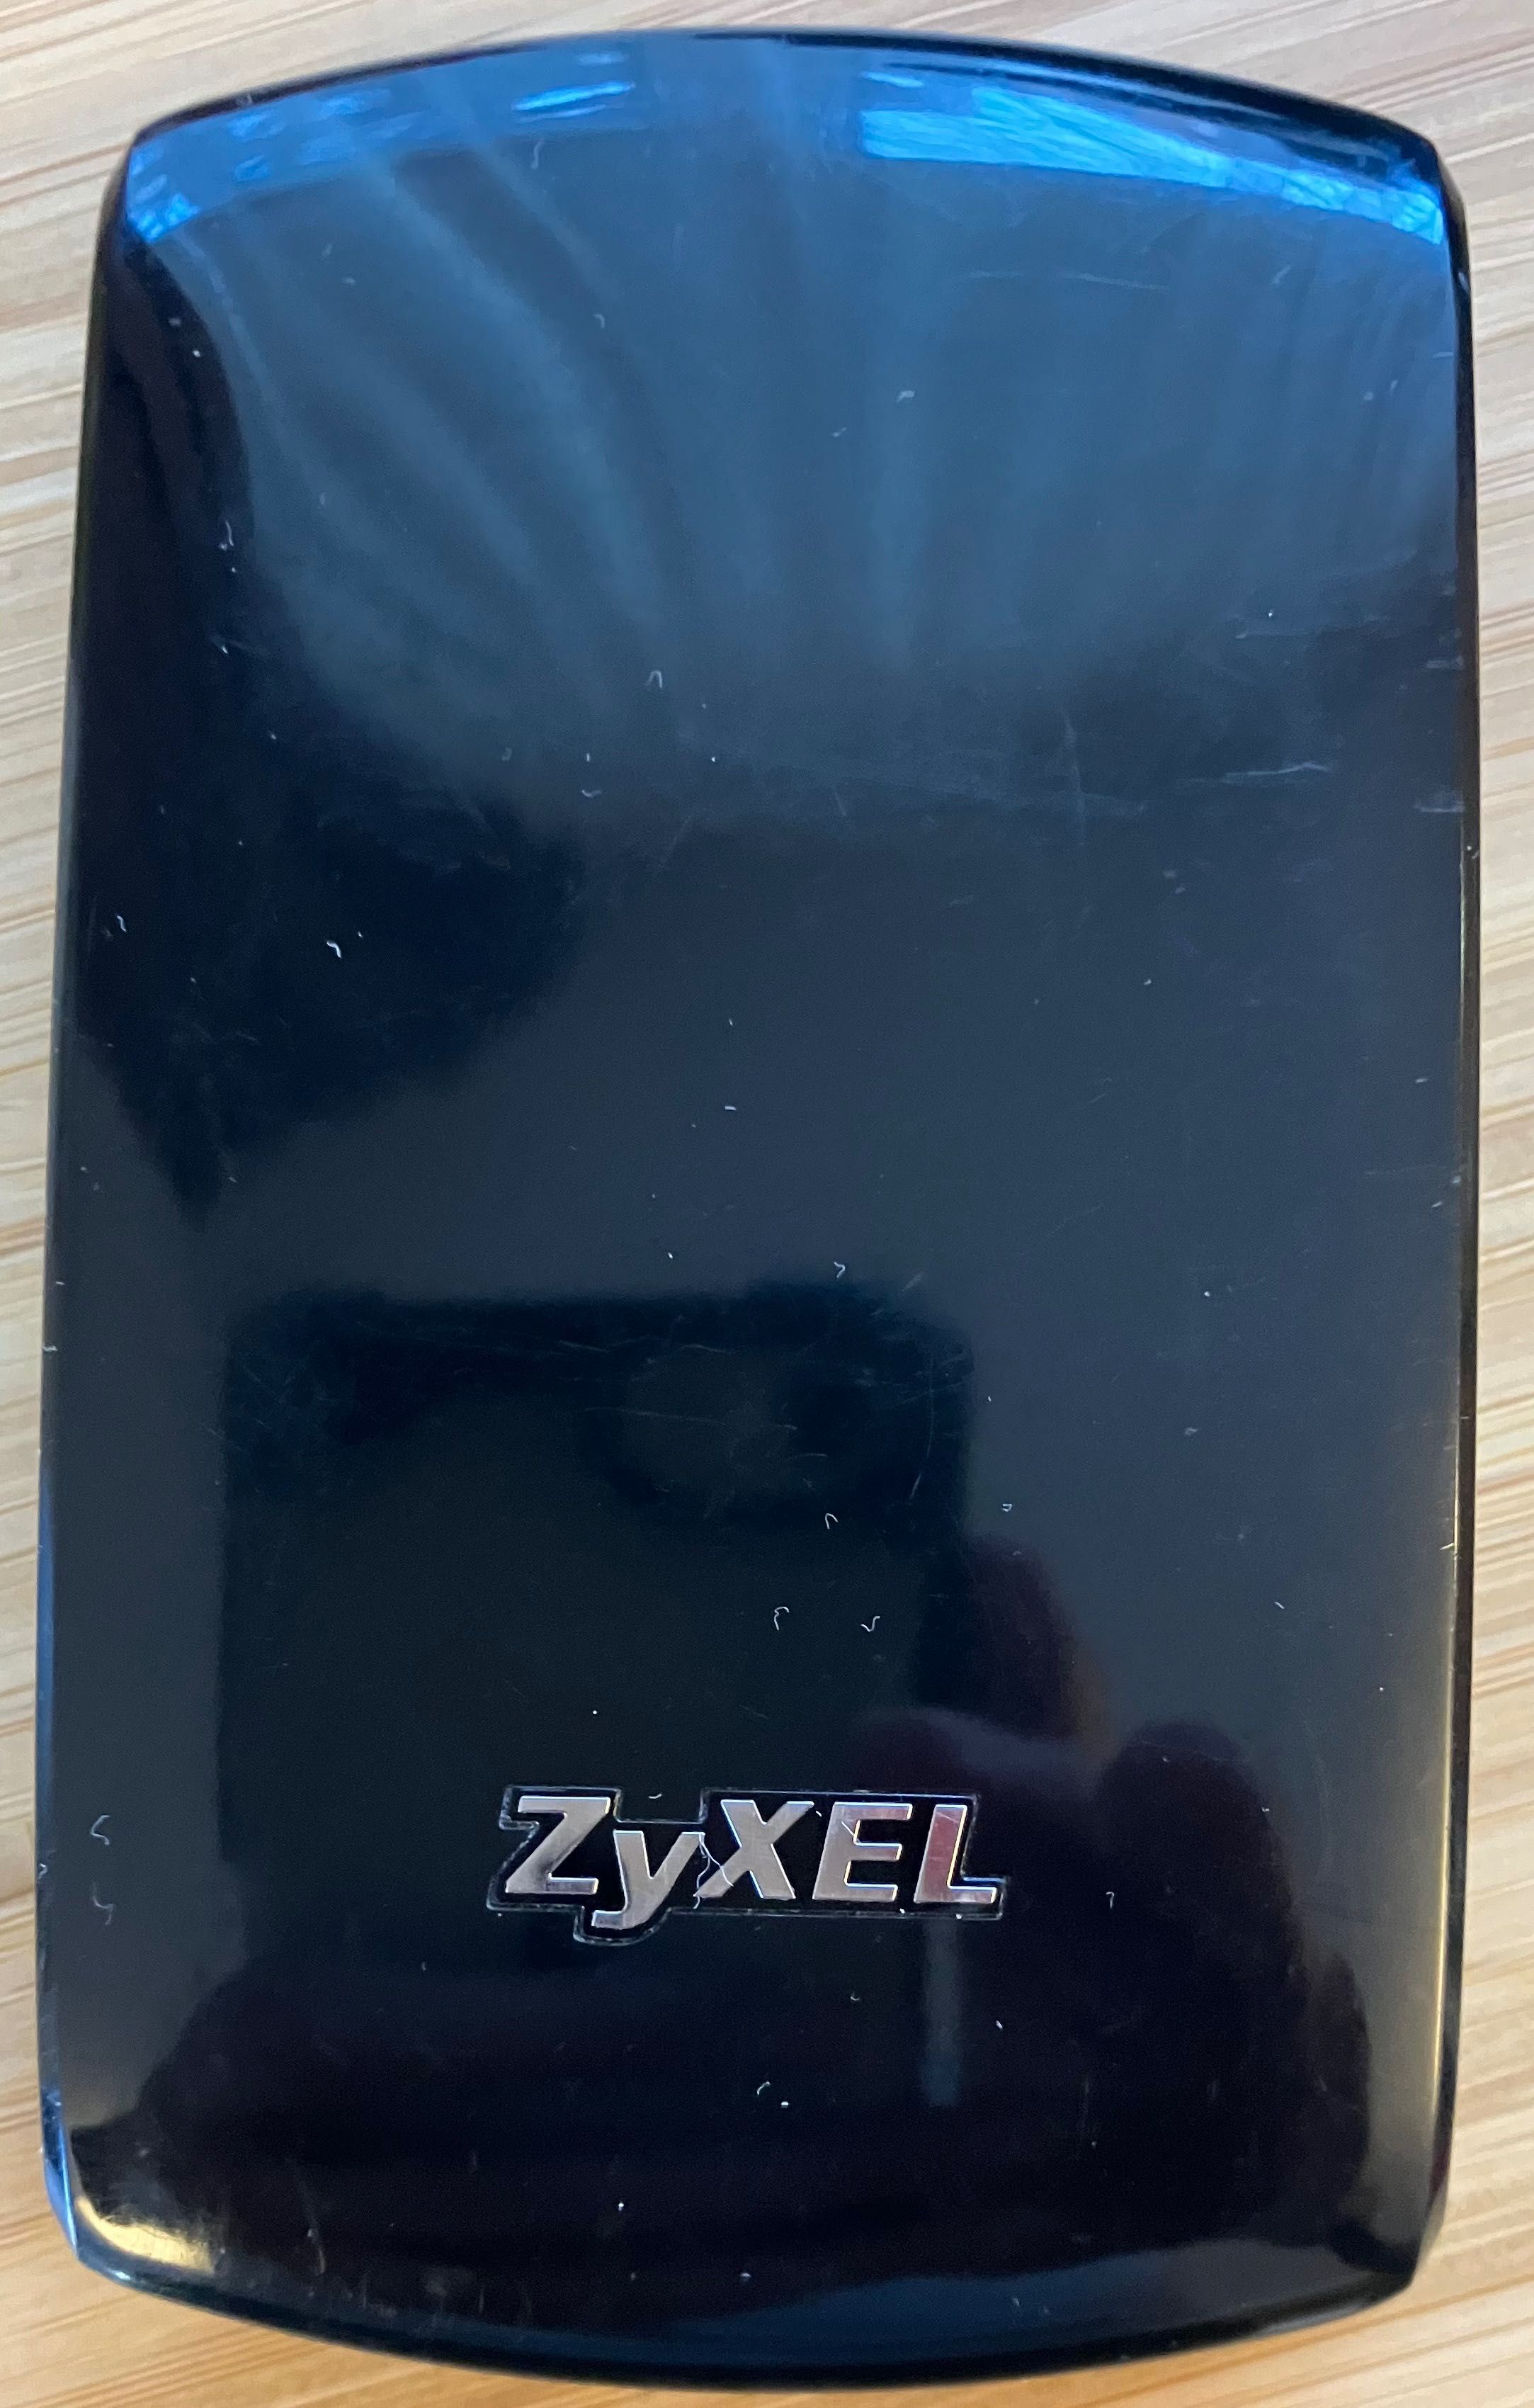 Безжичен портативен 4G/LTE Dual-Band Рутер Zyxel MiFi WAH7706